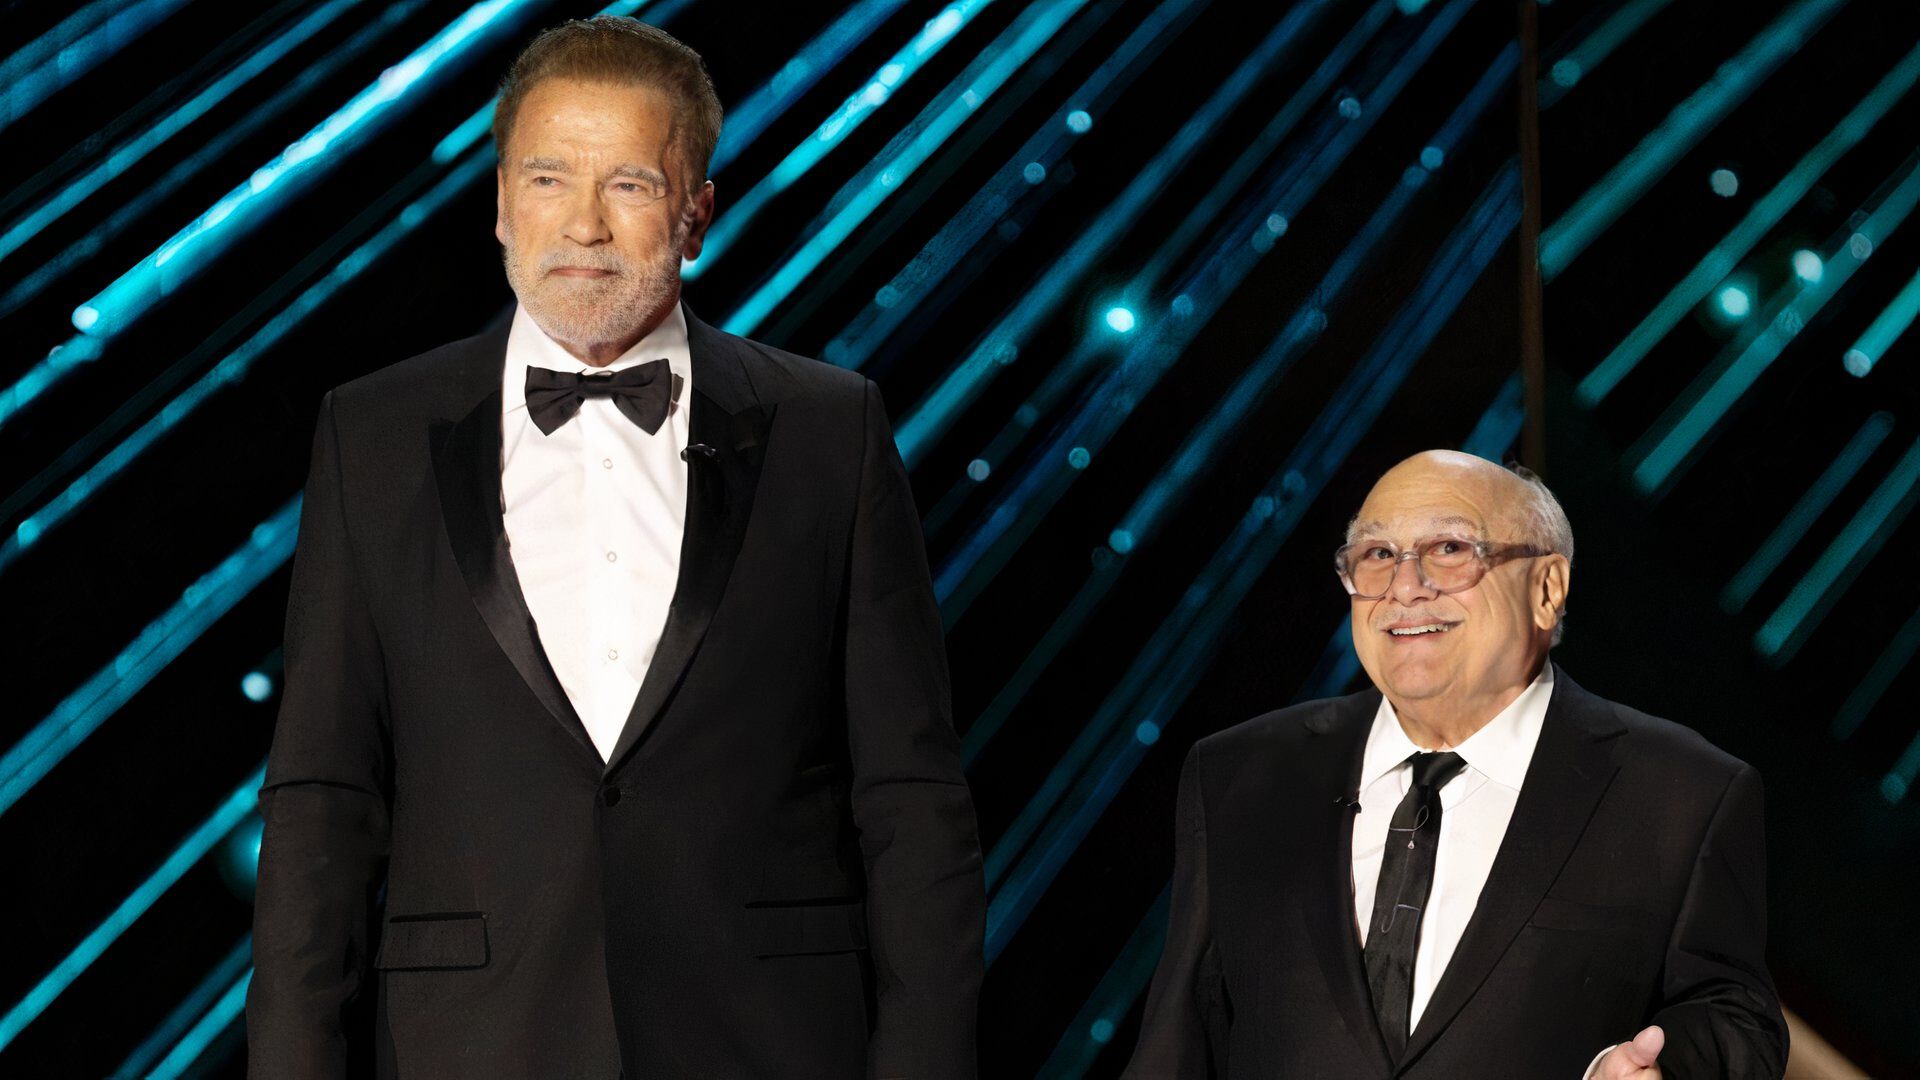 Arnold Schwarzenegger and Danny DeVito at the Oscars